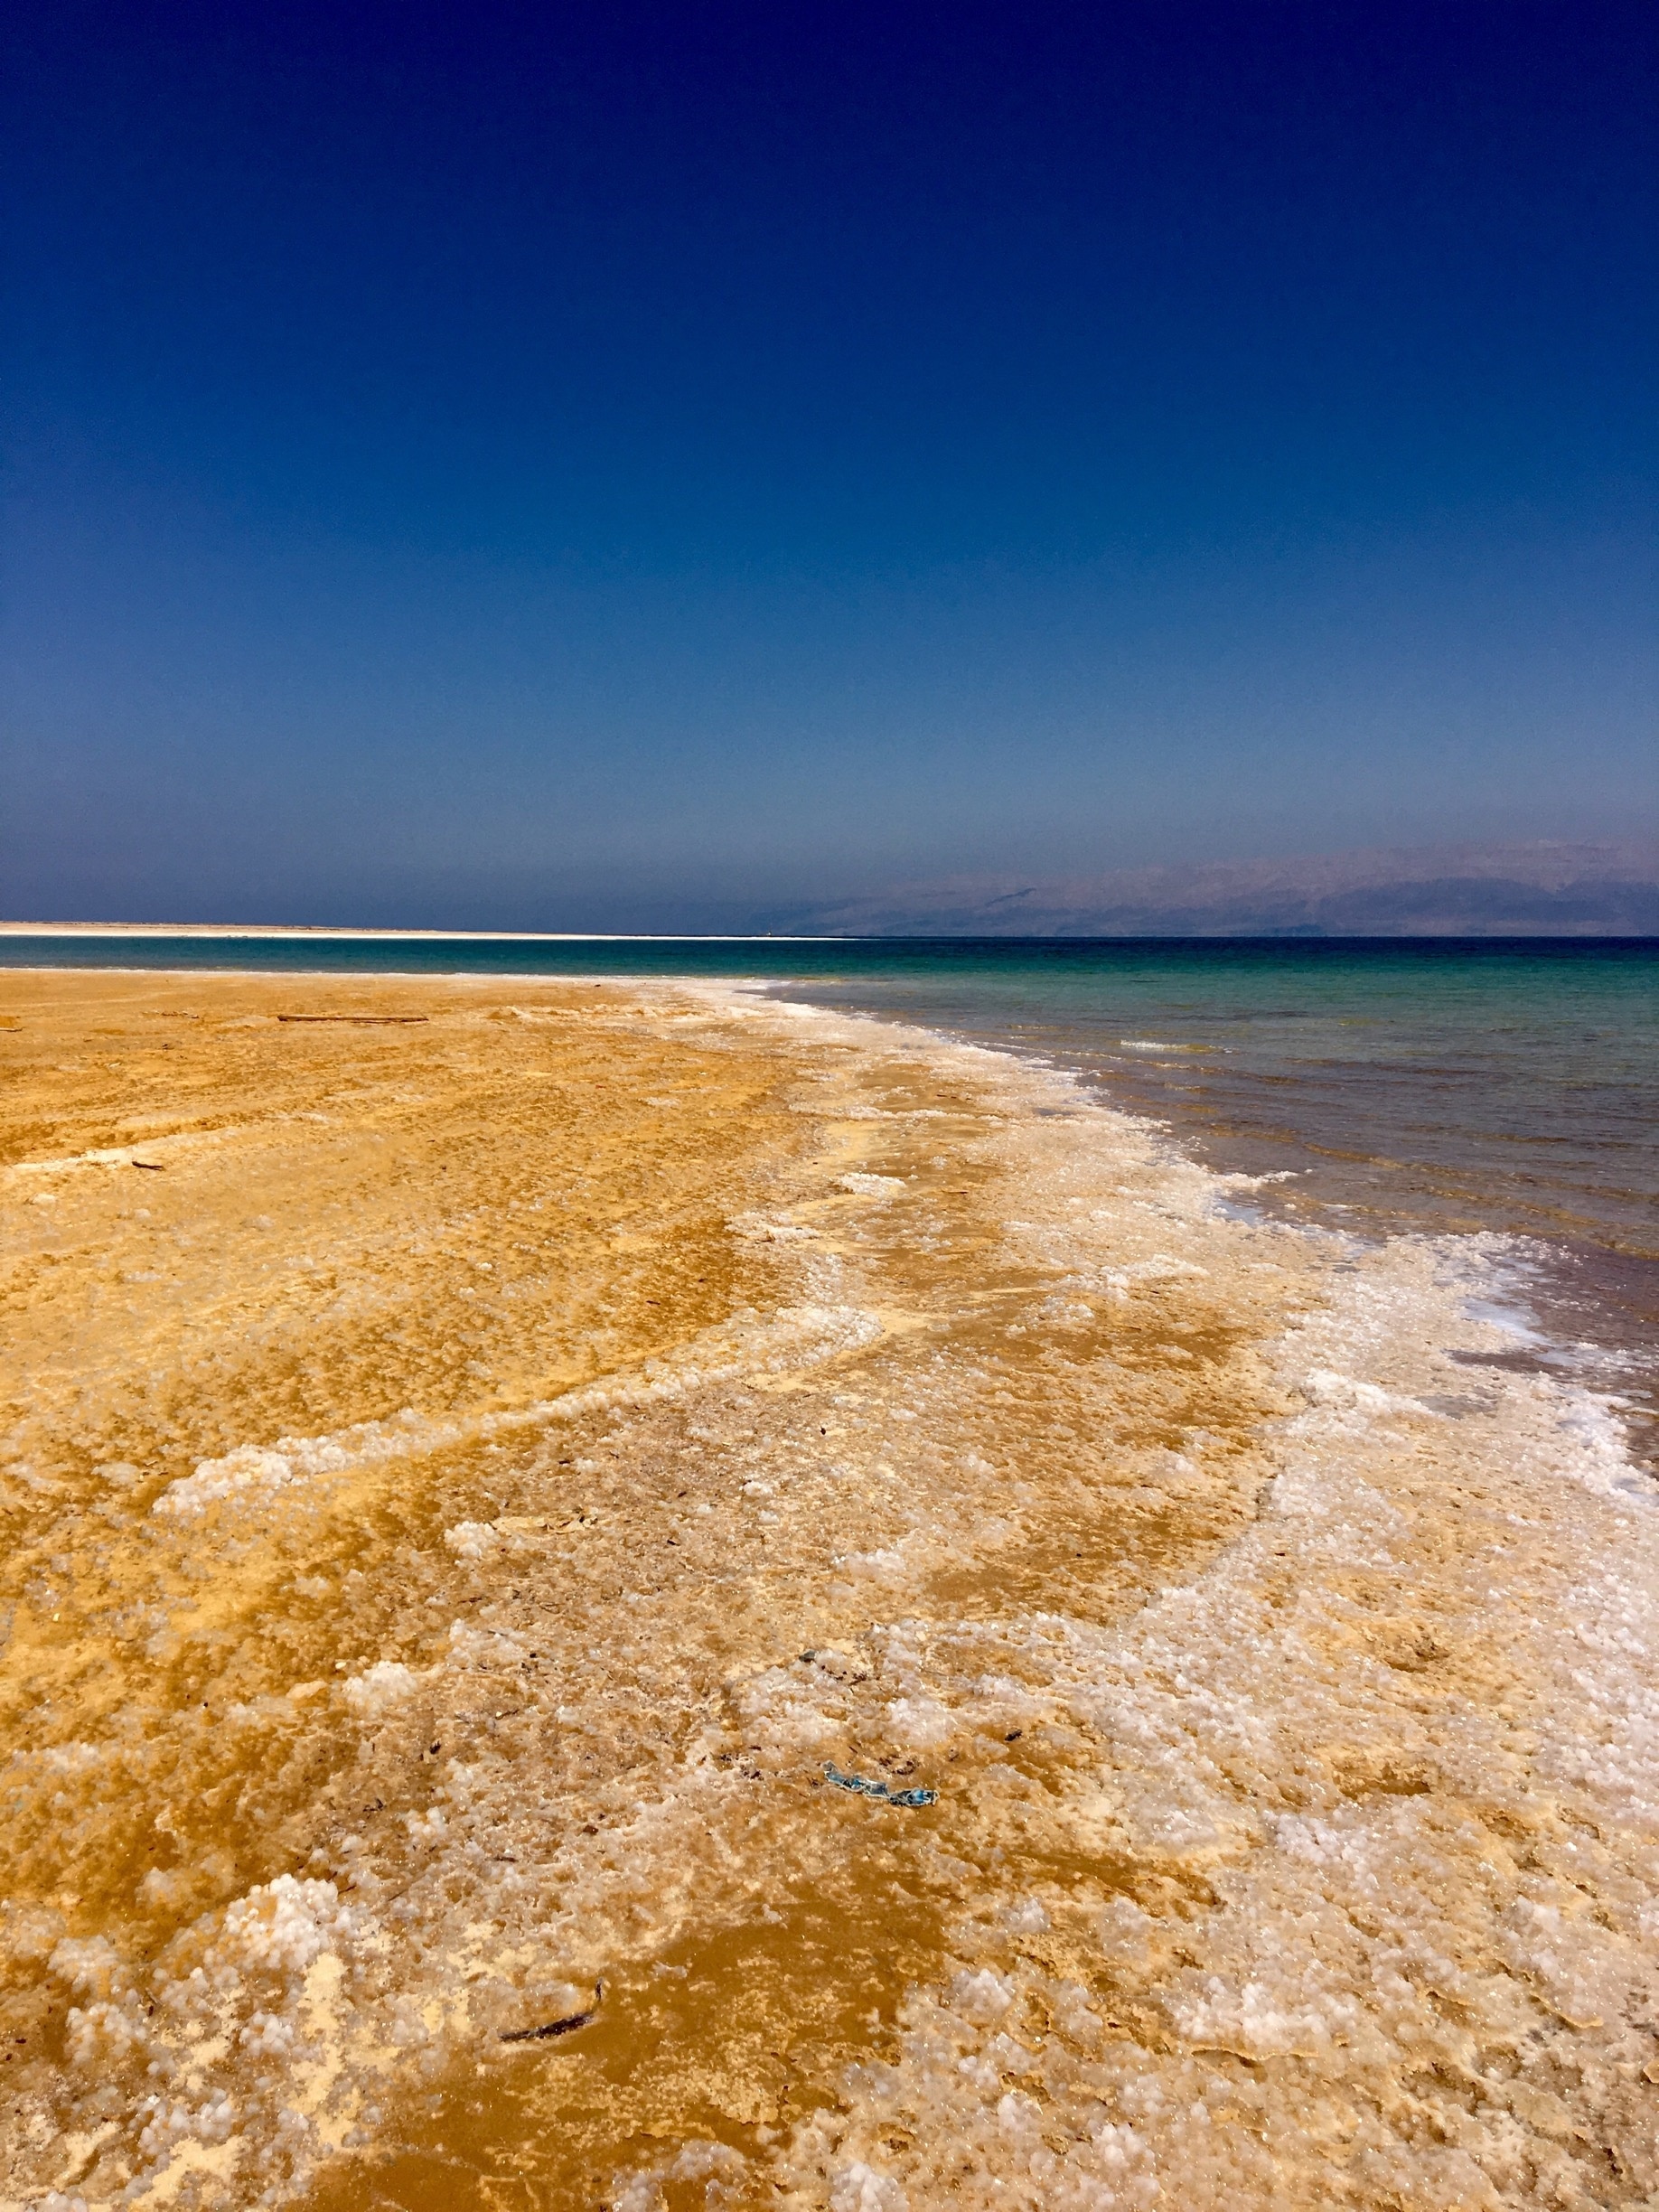 Salty shores. Flip flops essential! #lifeatexpedia #israel #deadsea #your2016!
#beachbound